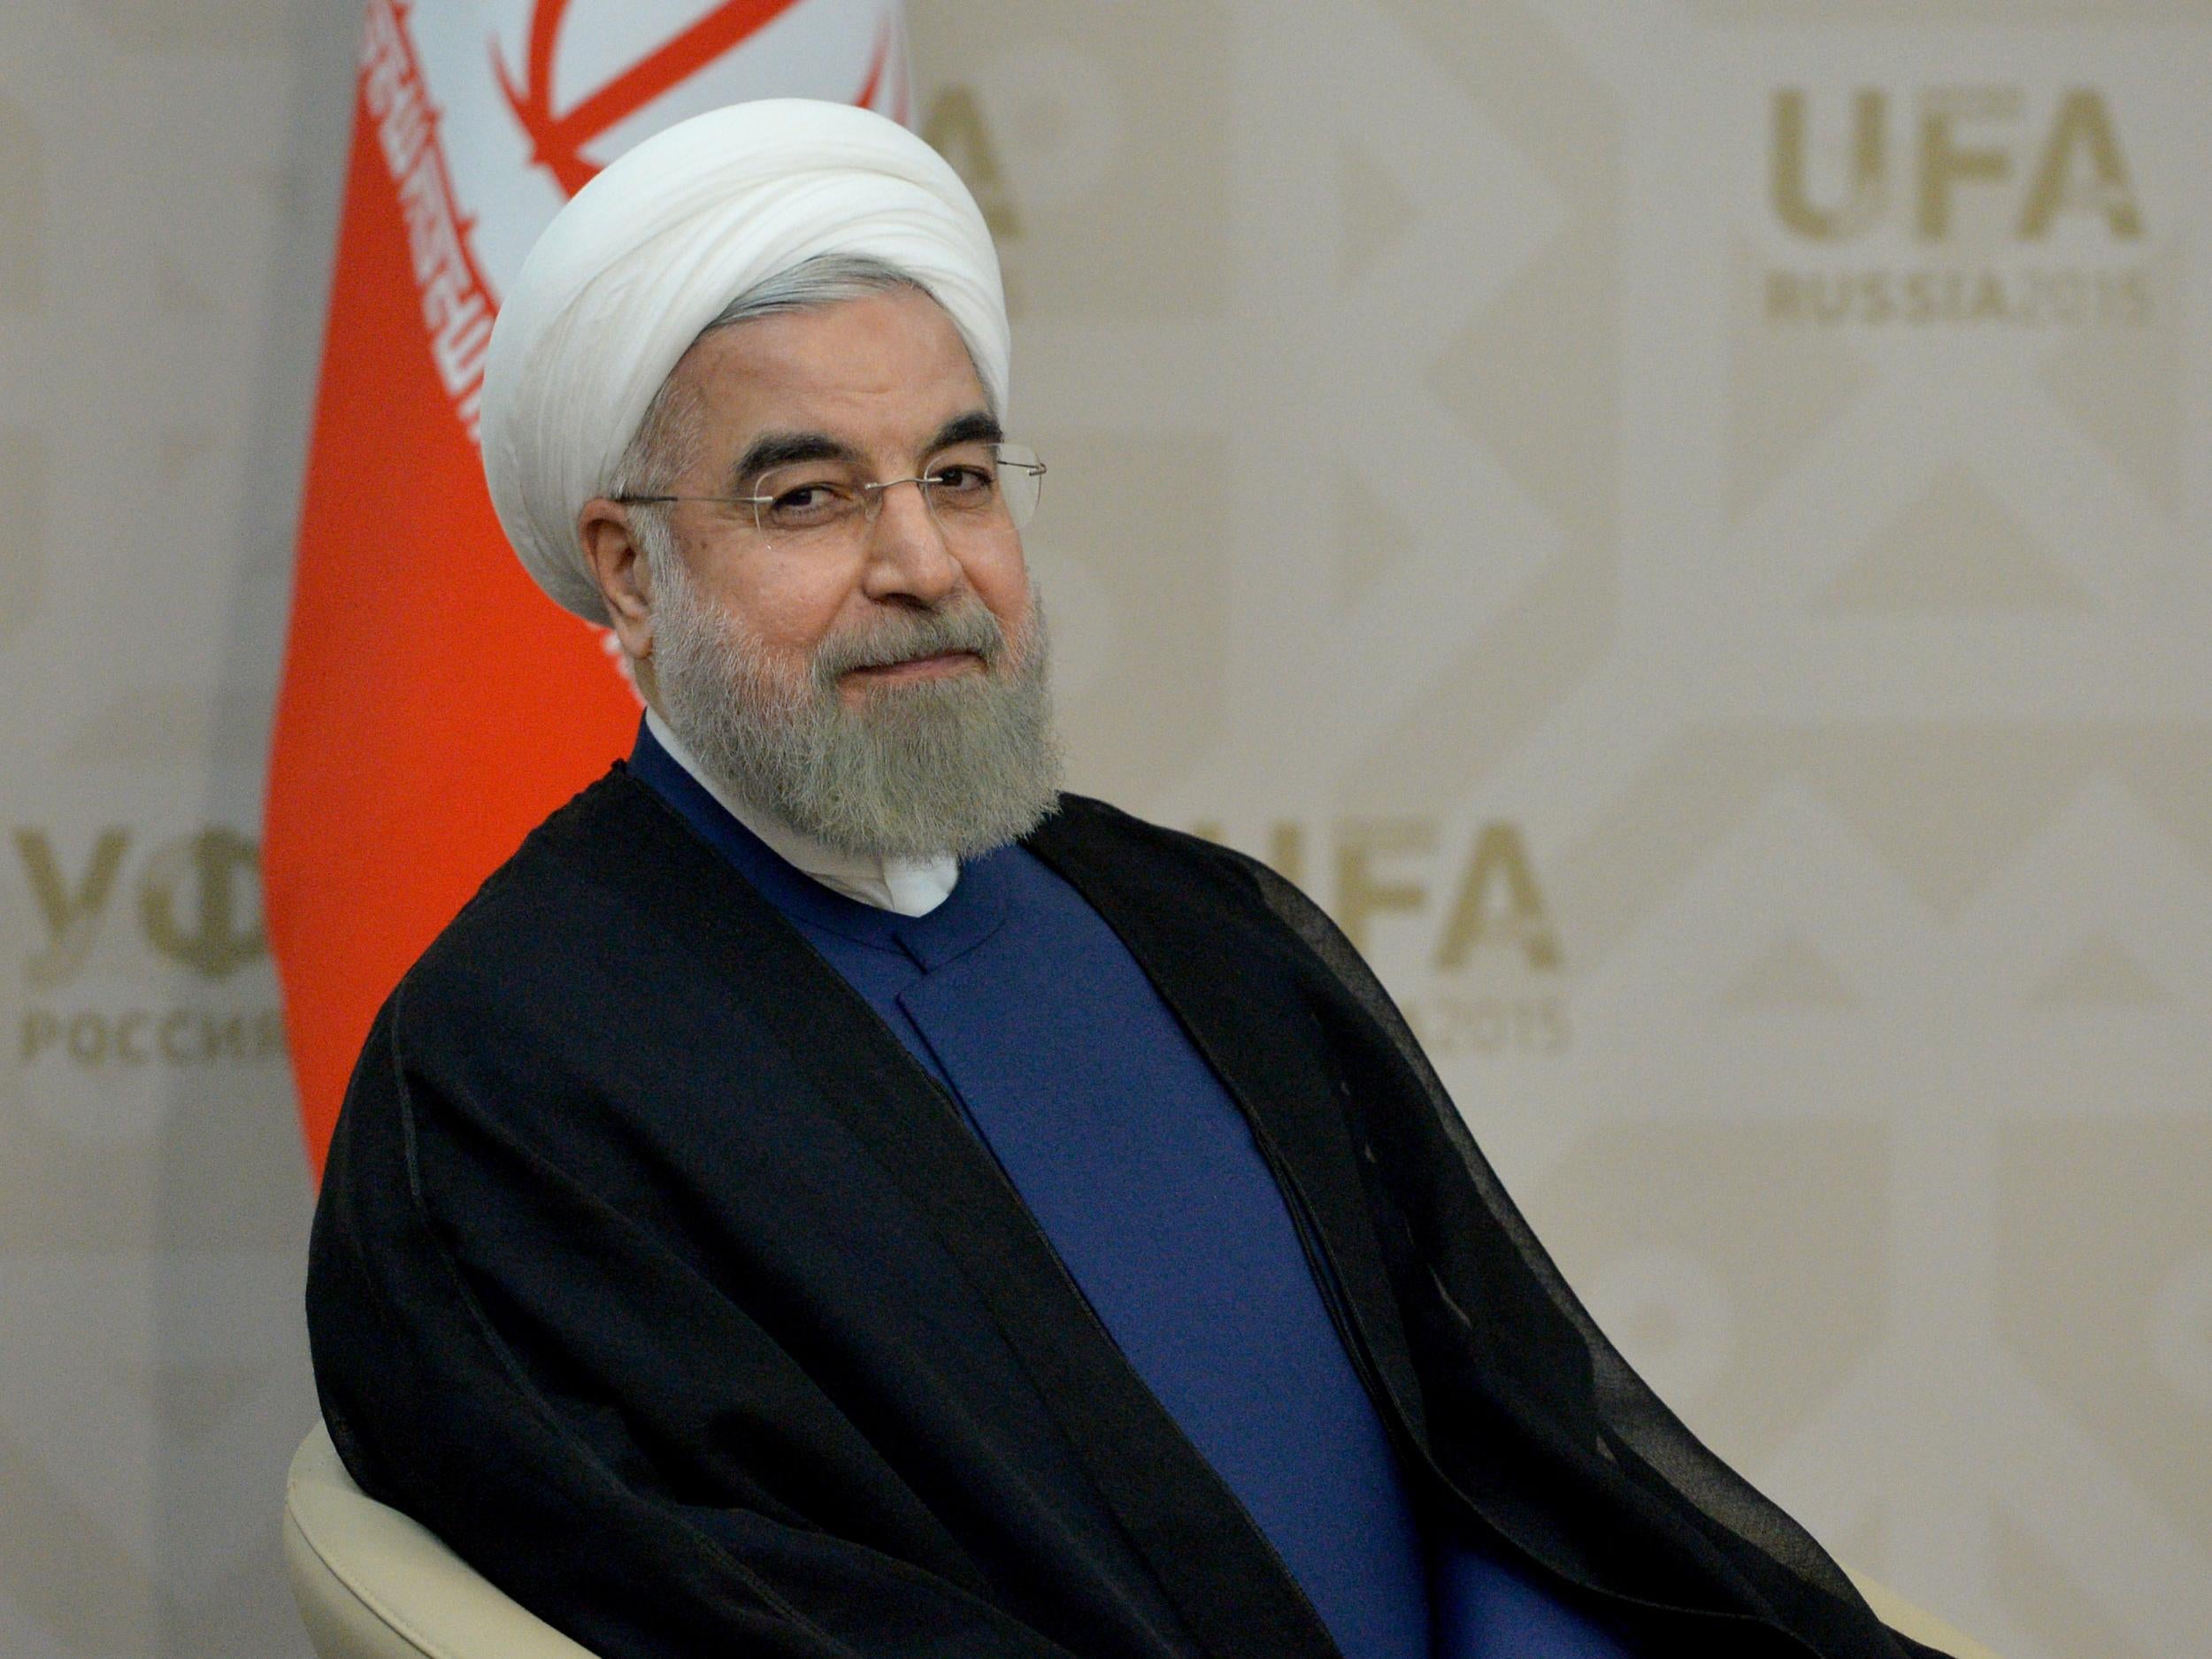 President of the Islamic Republic of Iran Hassan Rouhani